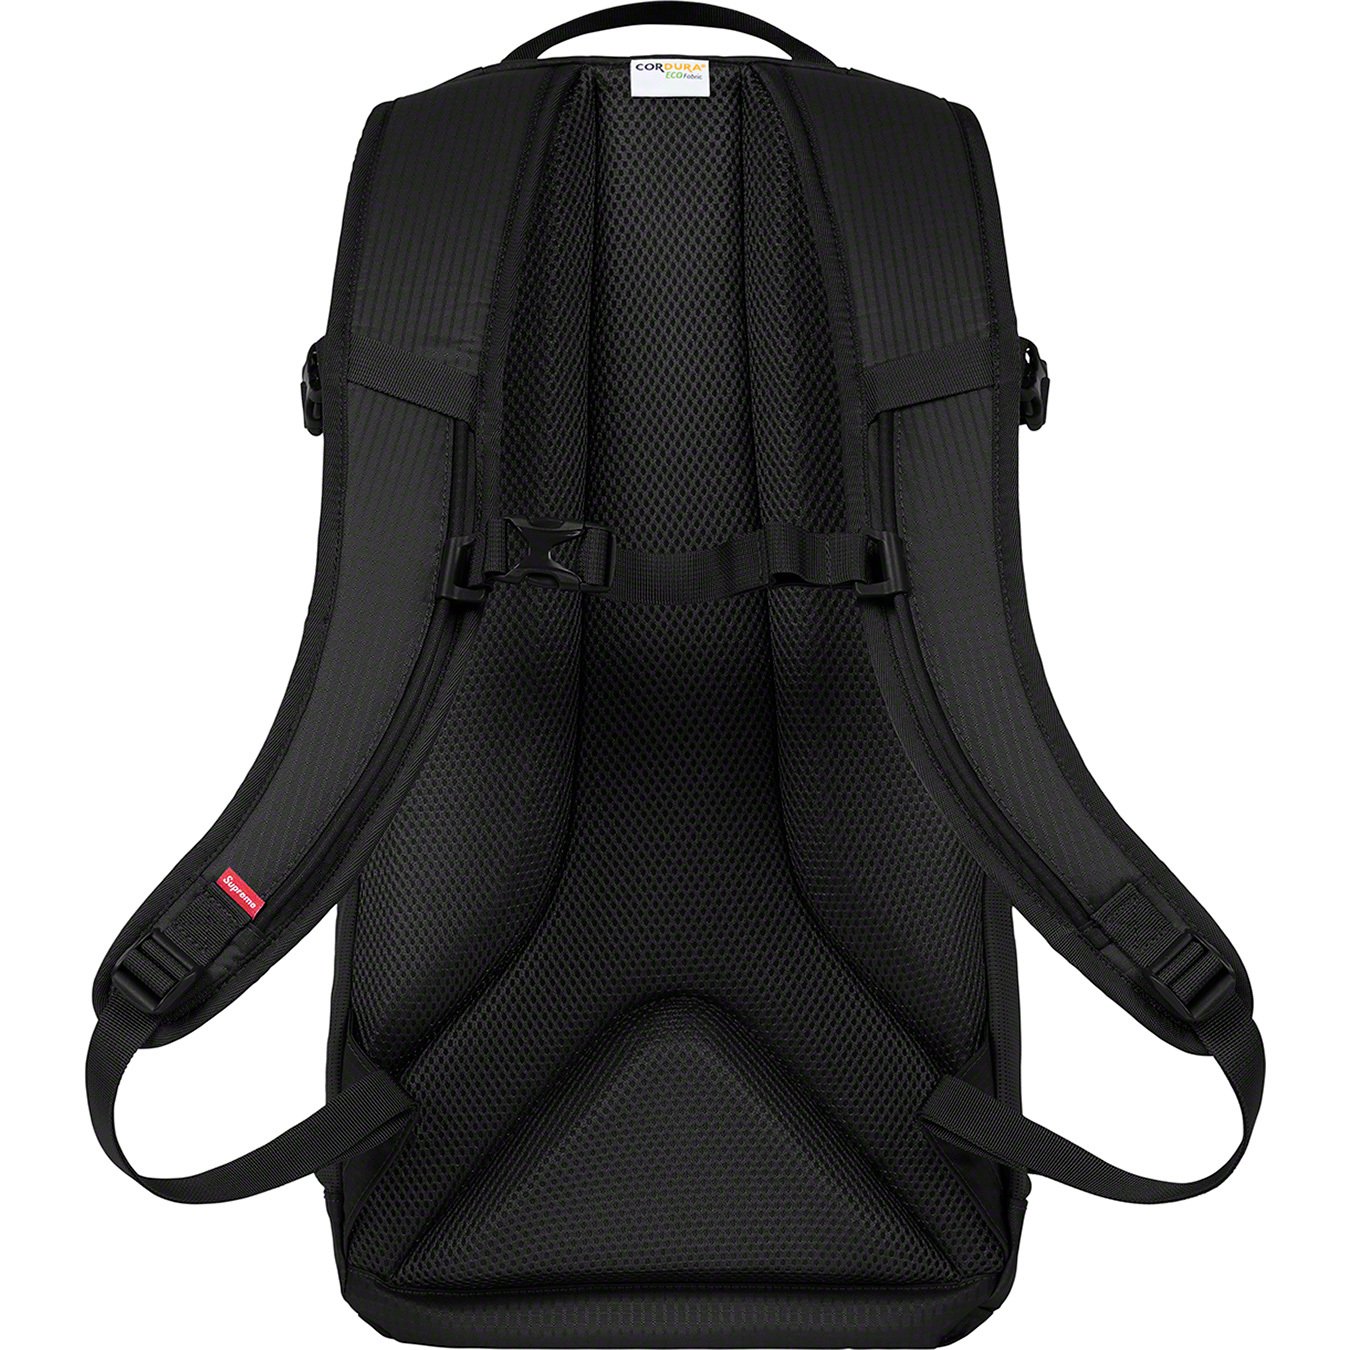 Supreme SS17 Cordura Duffle Bag (Black)